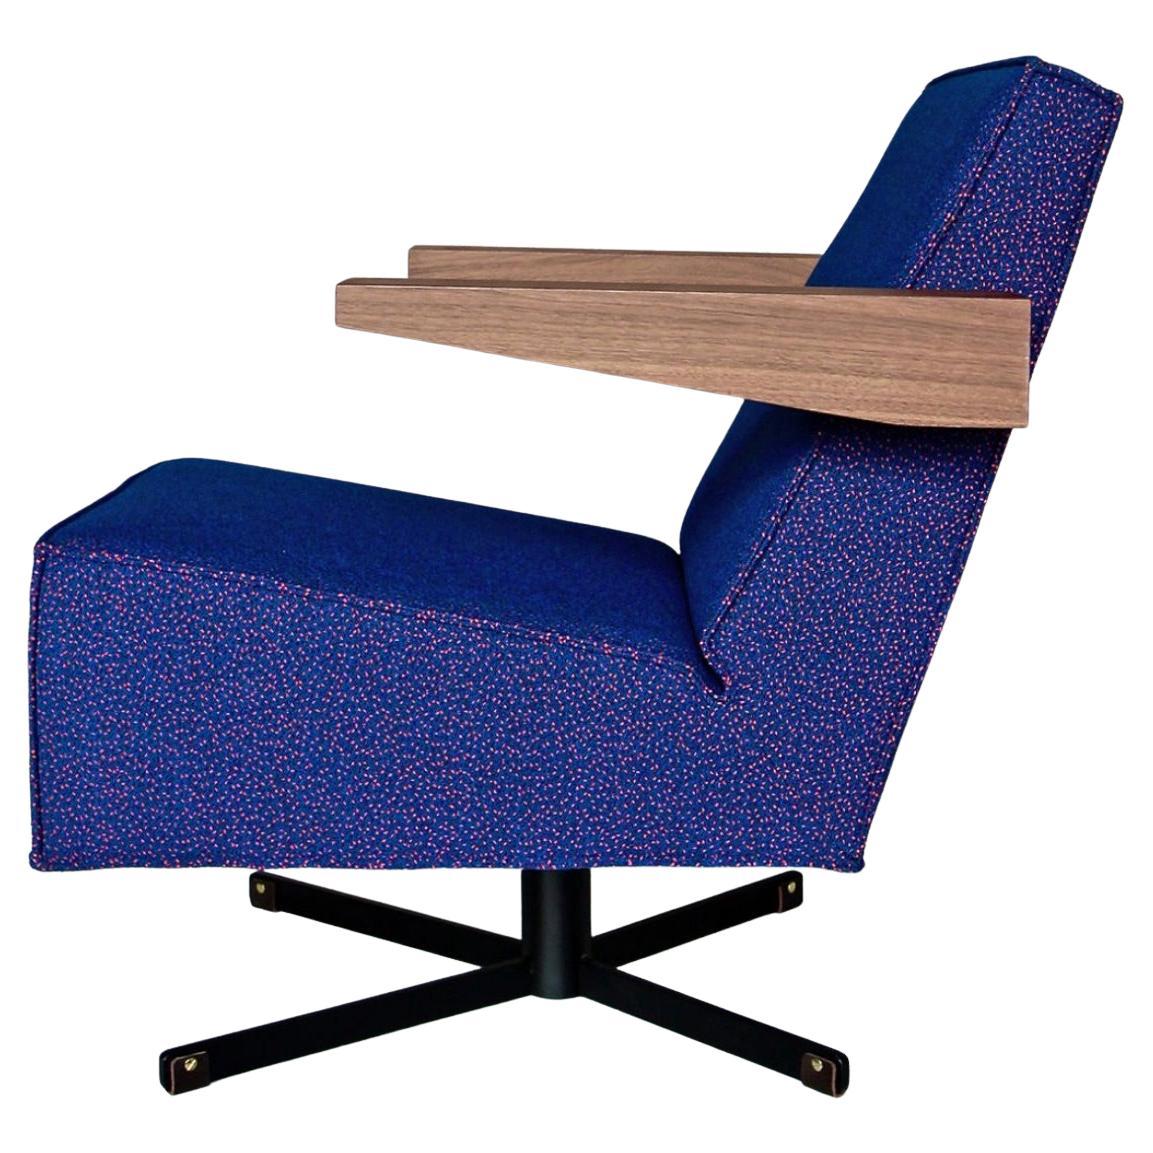 Gerrit Rietveld 1958 Unesco Press Room Chair for Spectrum, 'Colourful Vintage' For Sale